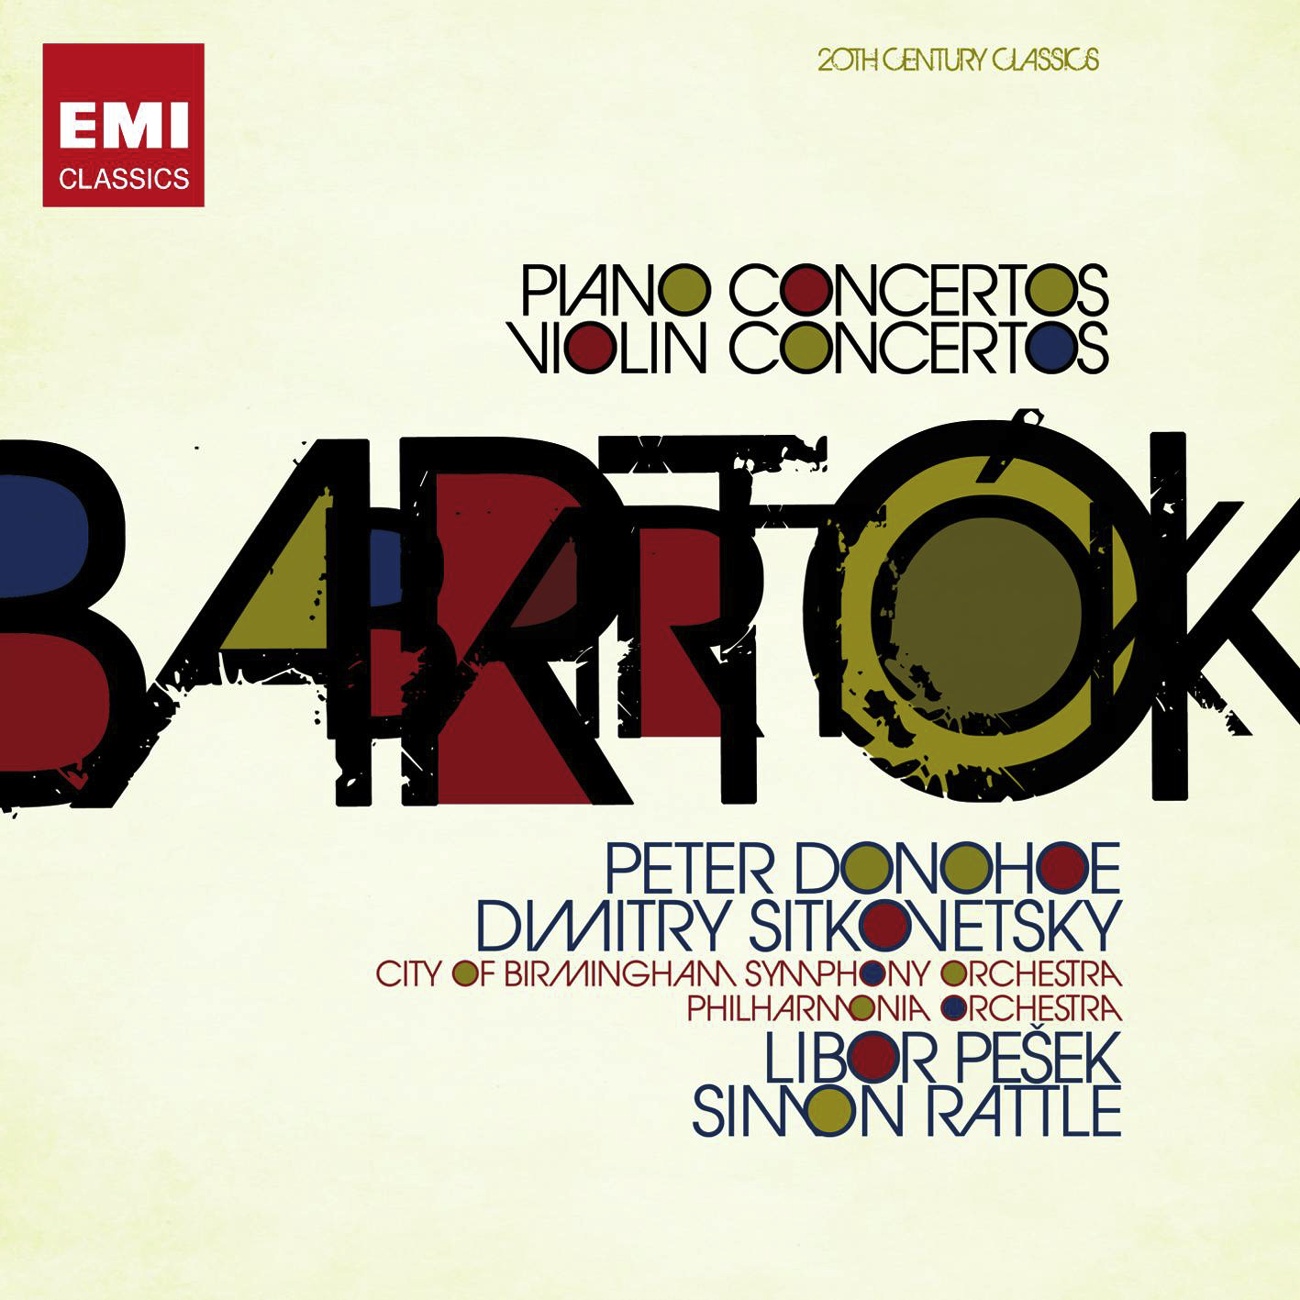 20th Century Classics: Bela Barto k